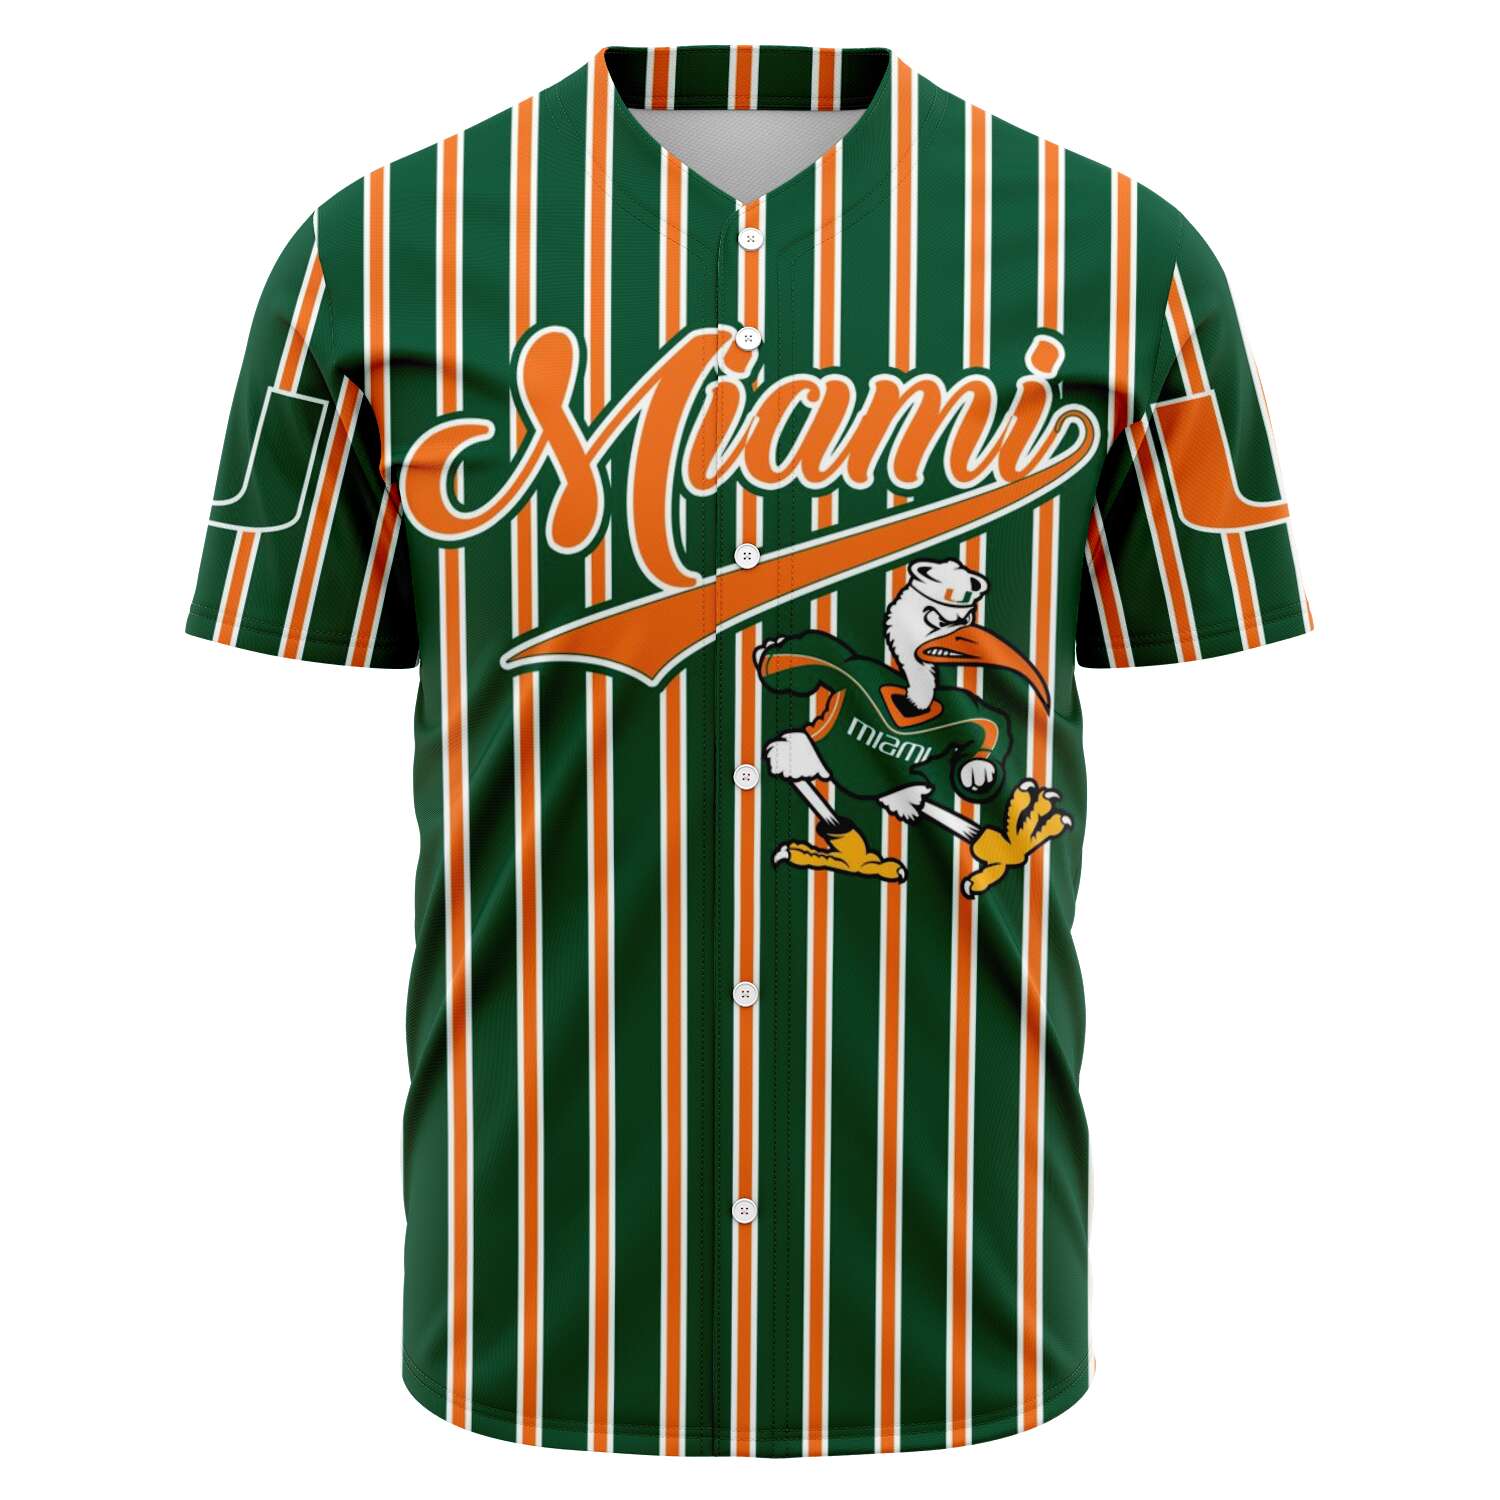 Miami Canes Baseball Jerseys All-Over-Print - joxtee